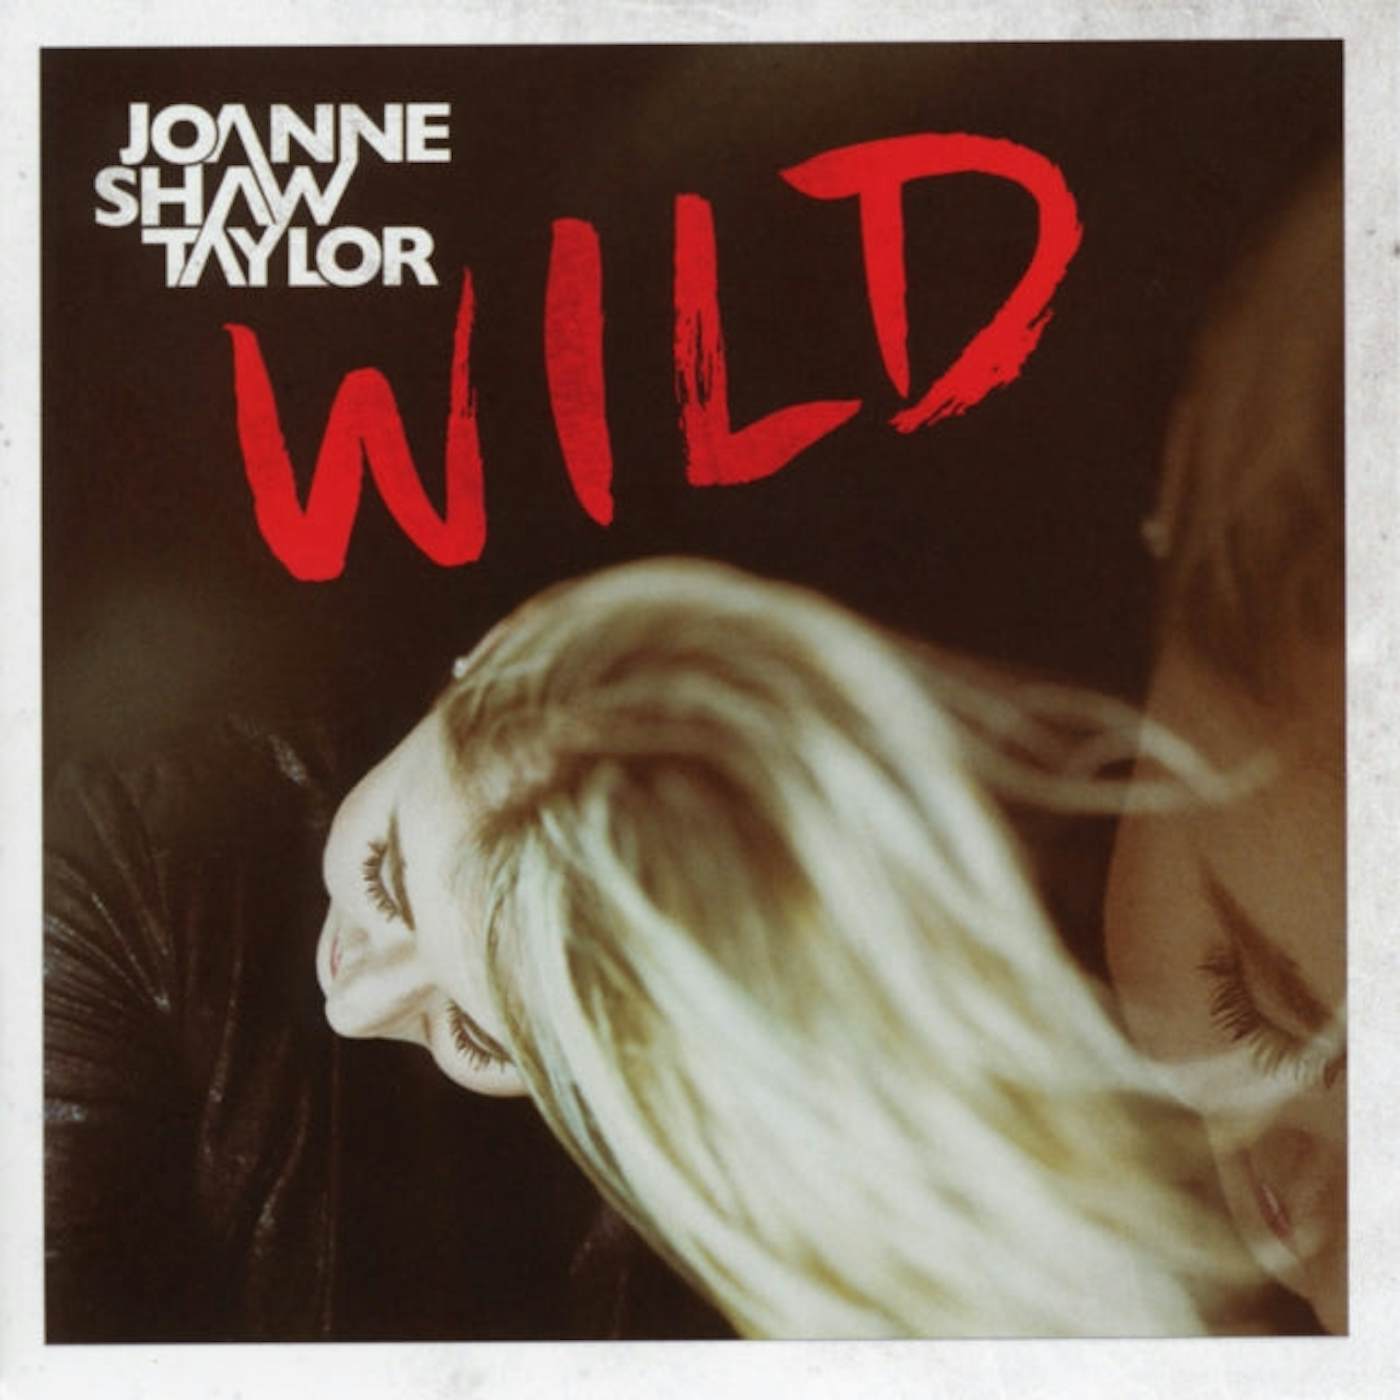 Joanne Shaw Taylor CD - Wild